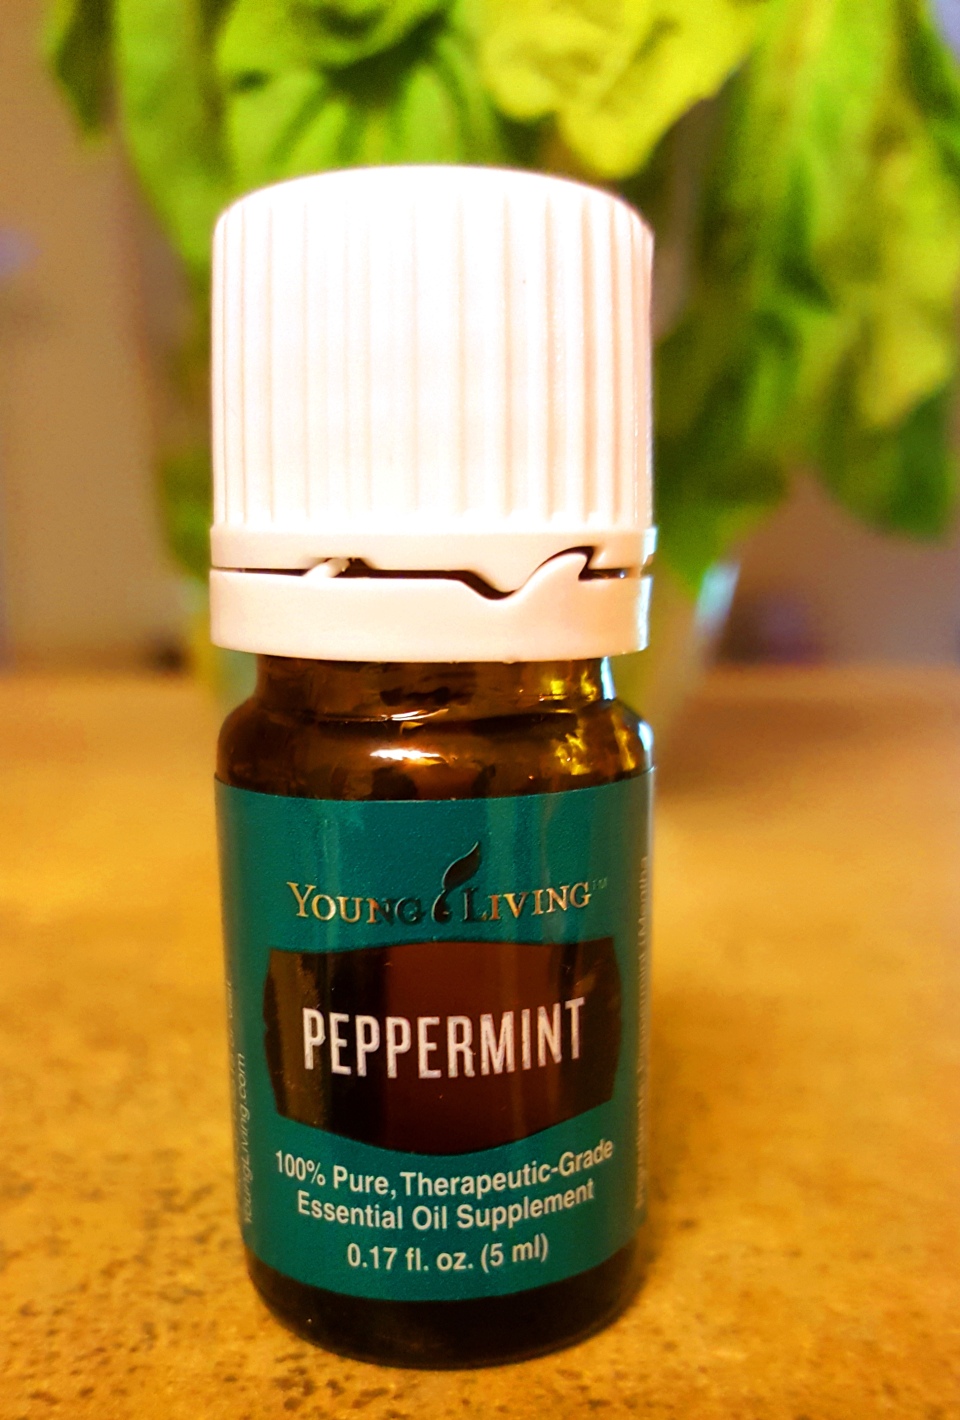 Peppermint oil